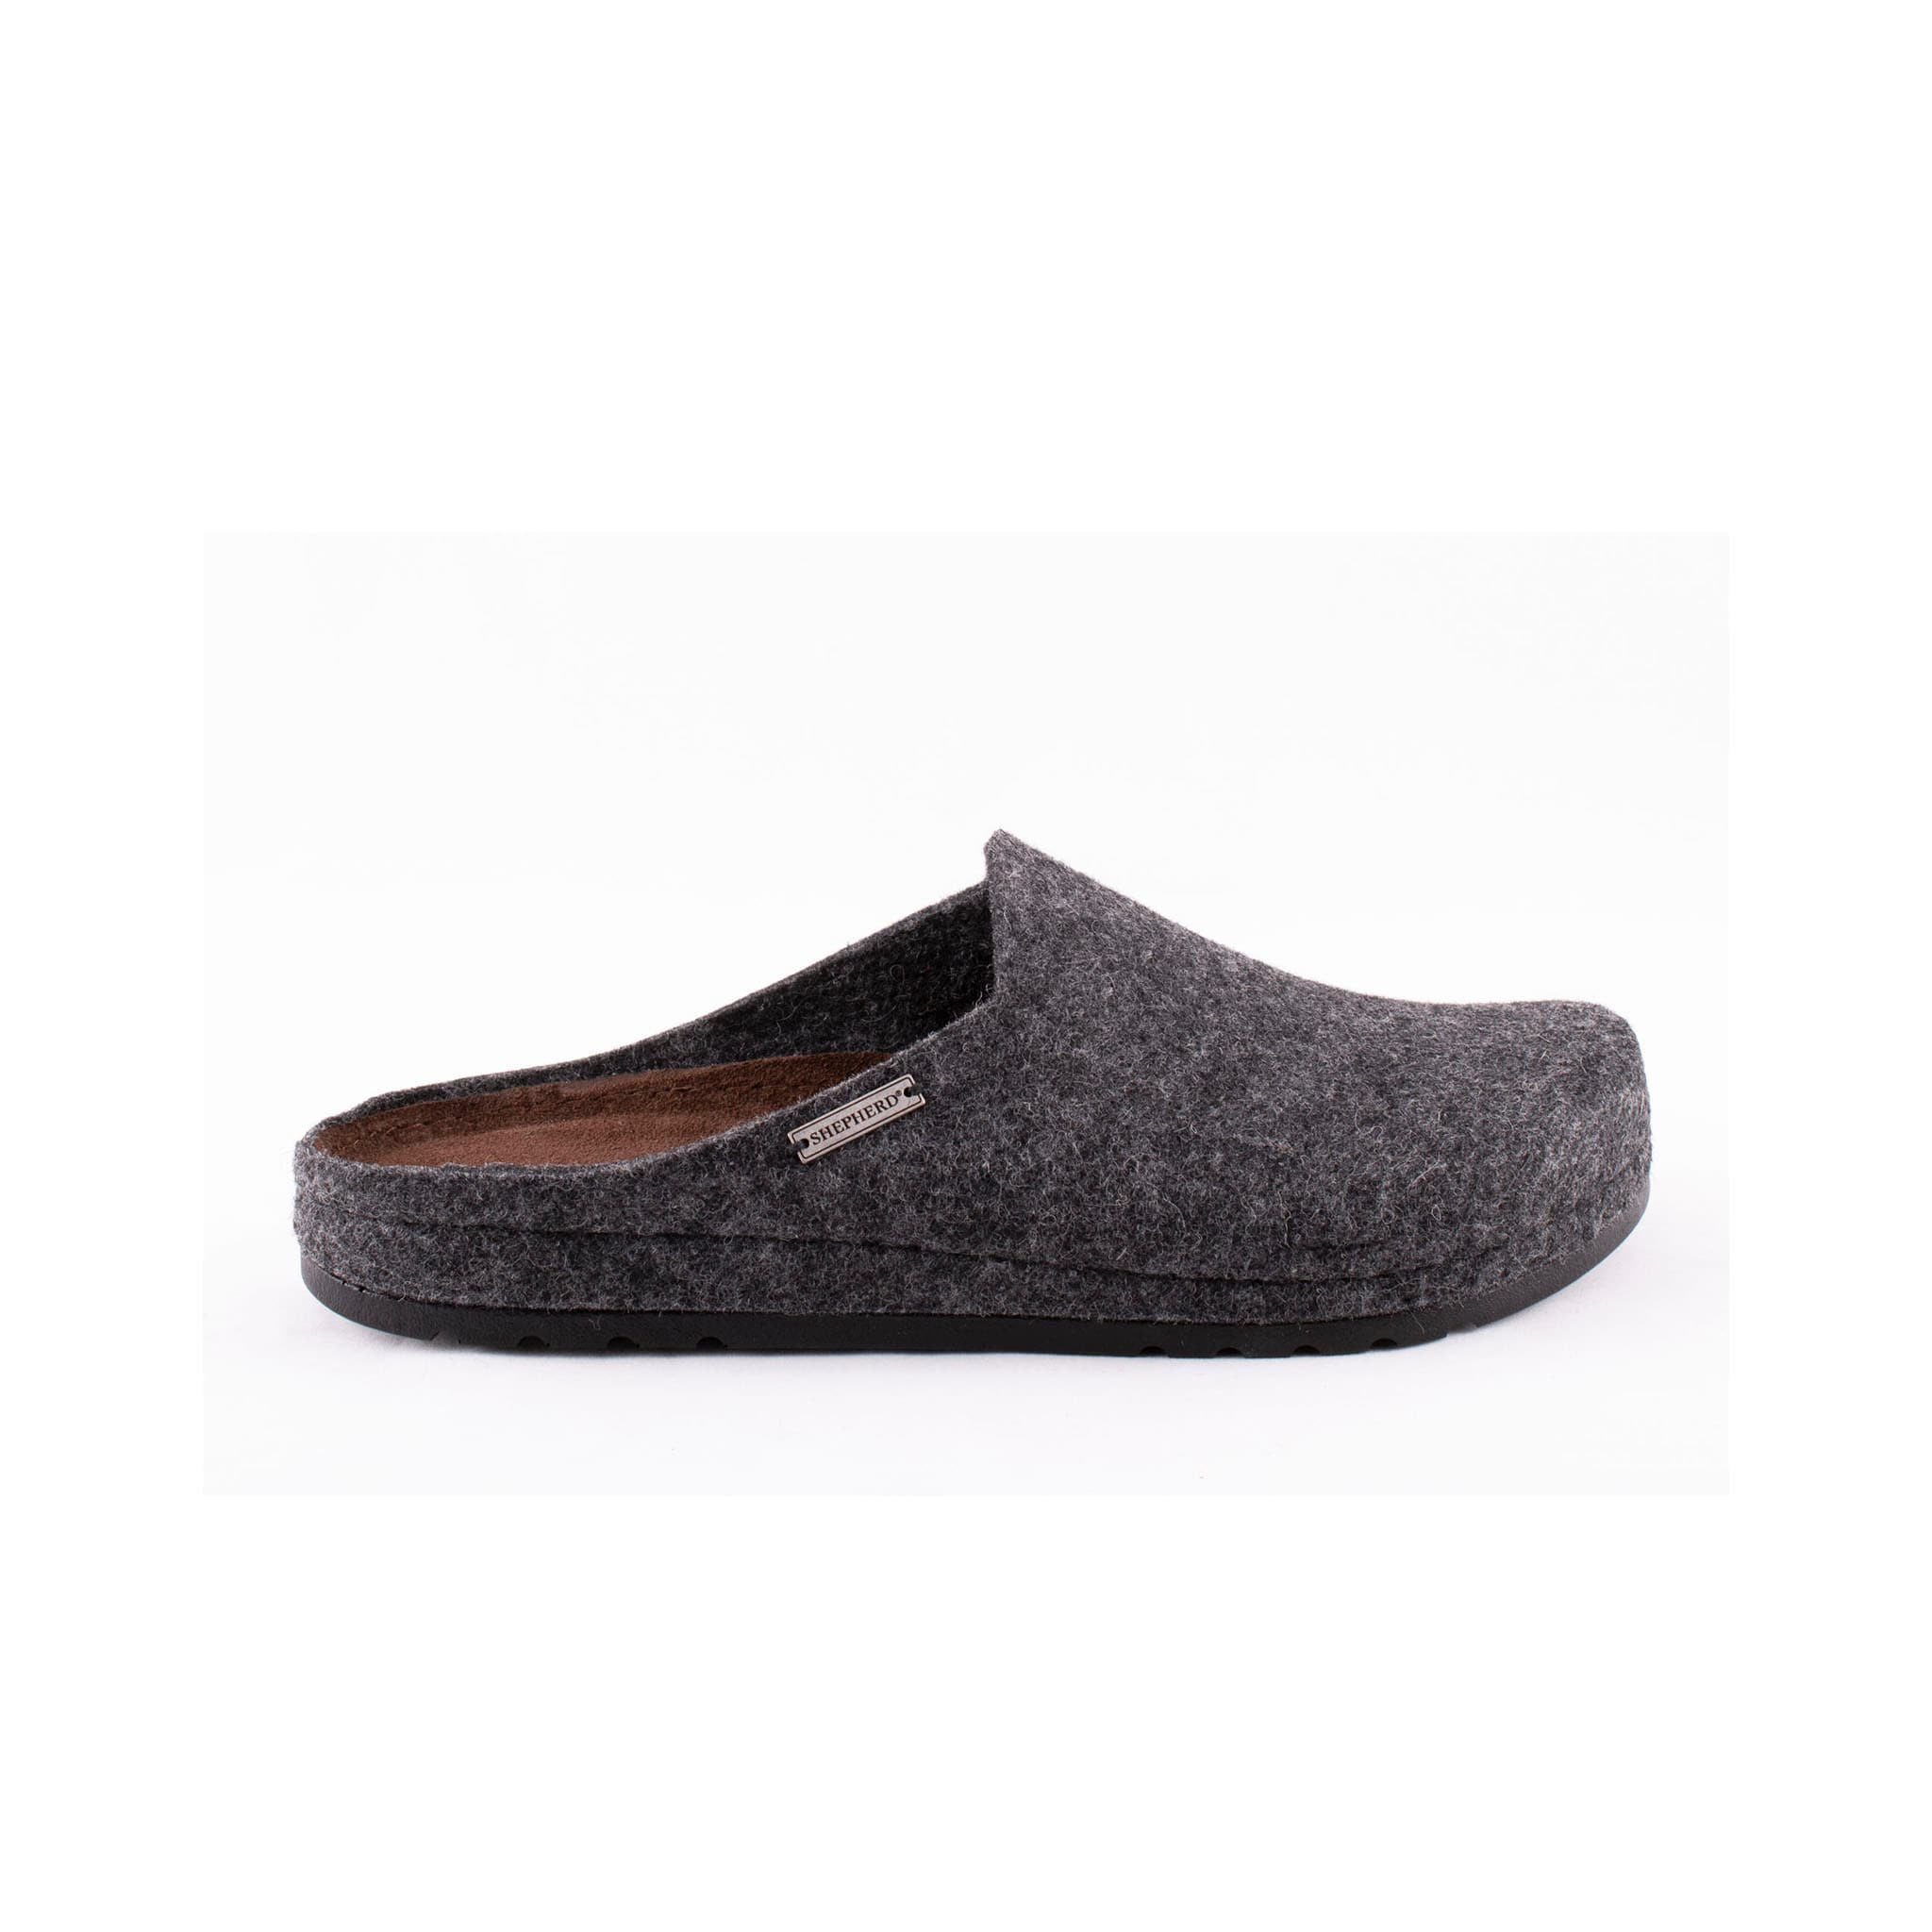 Samuel wool slippers